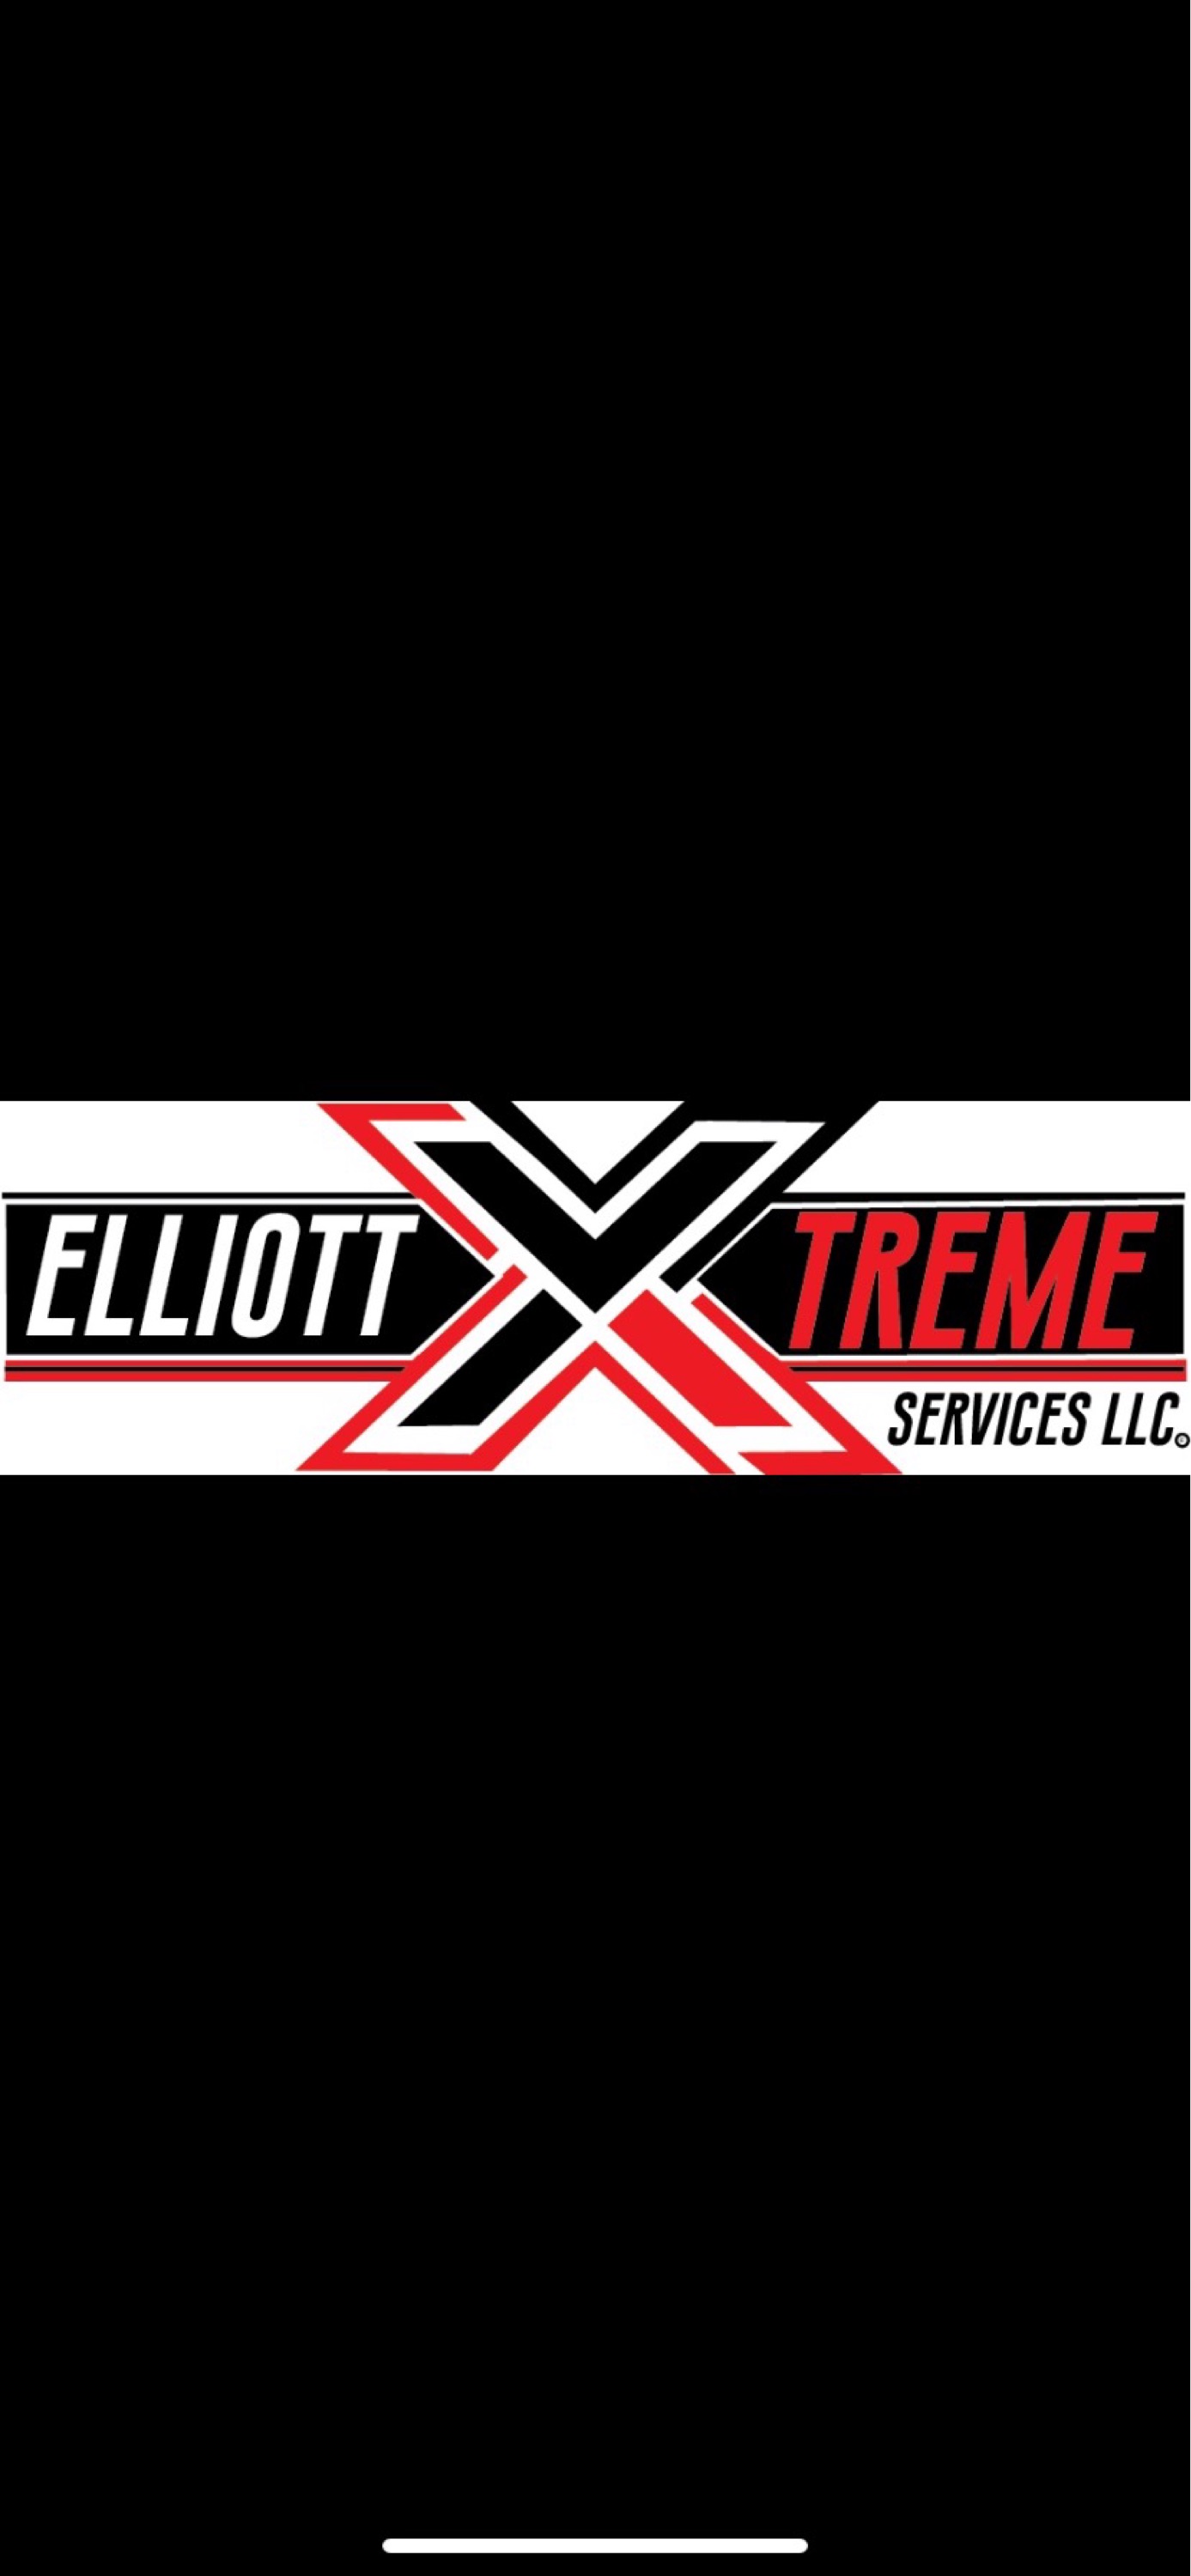 Elliott Xtreme Services Logo